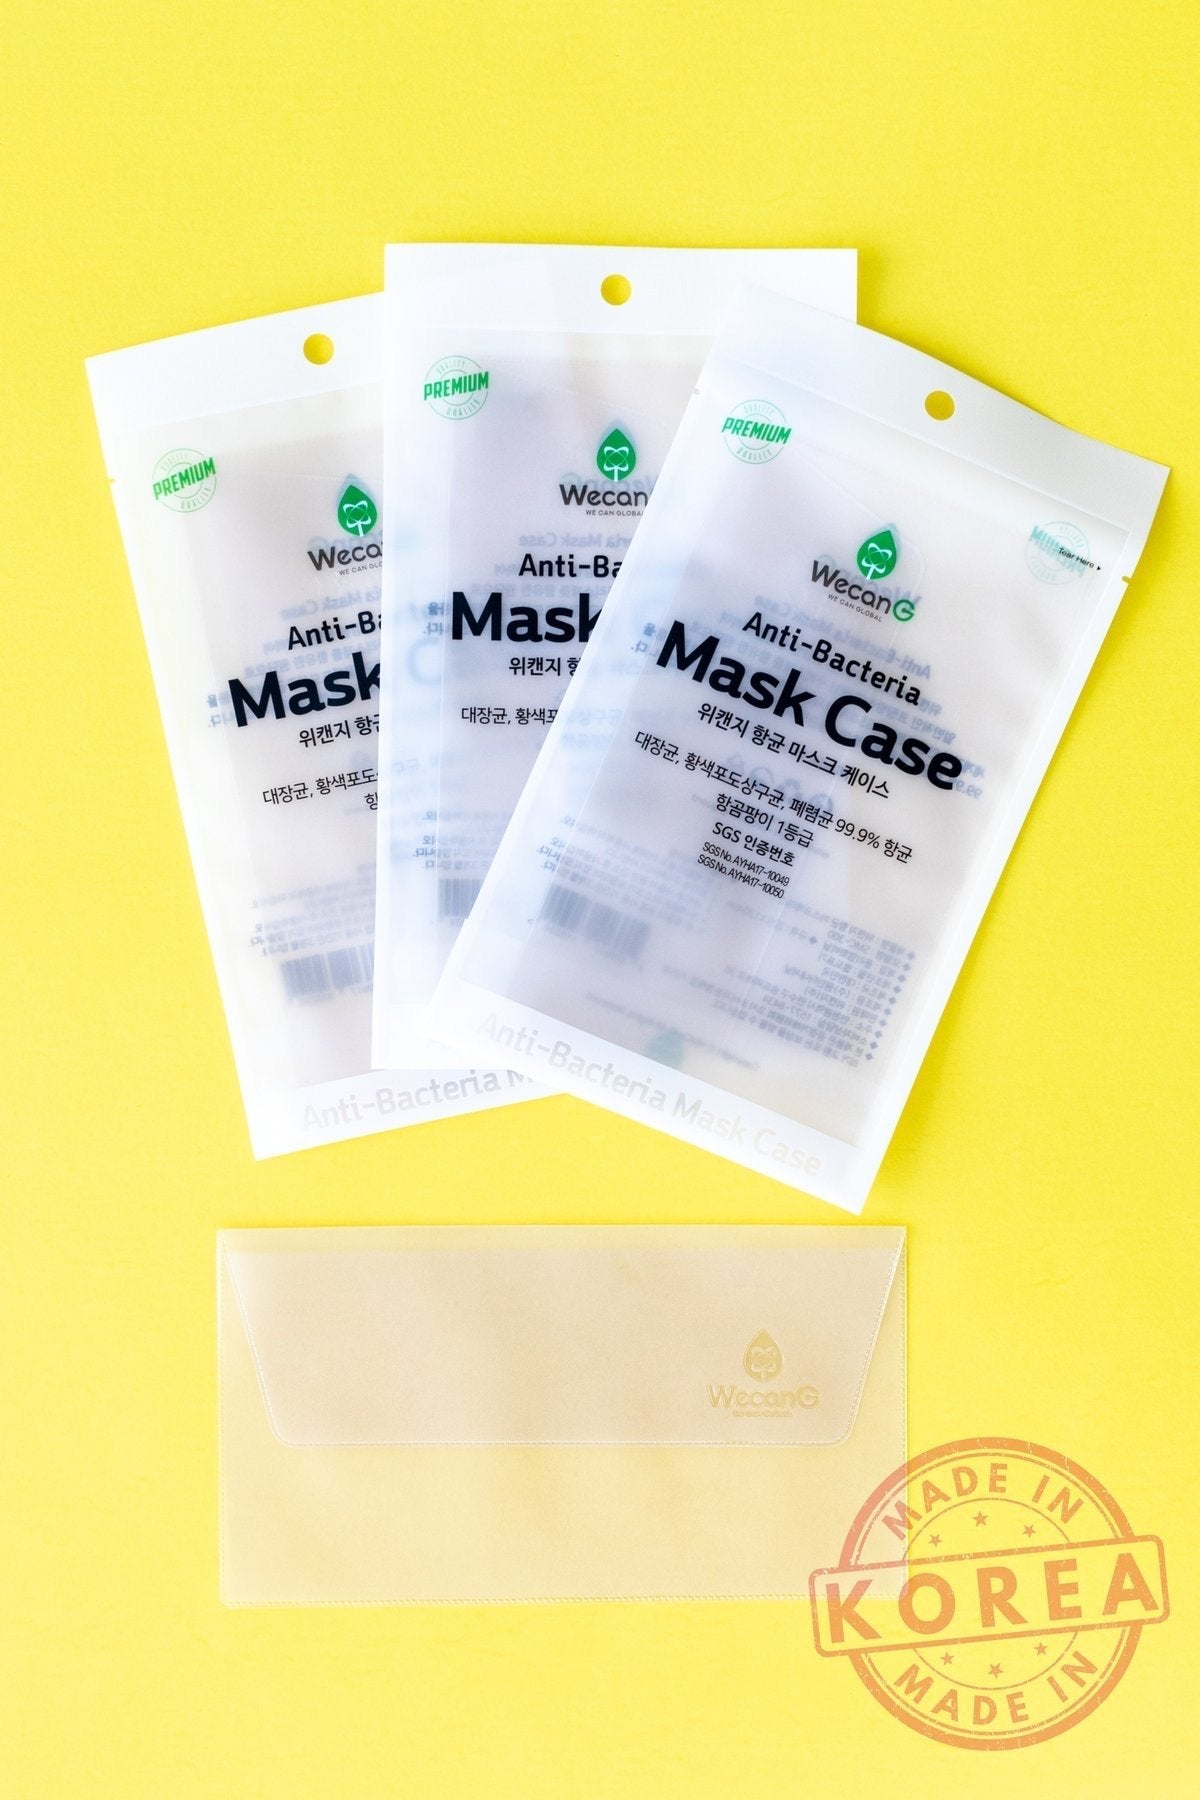 Anti- Bacteria Mask Case - Thuy Nhung Shop